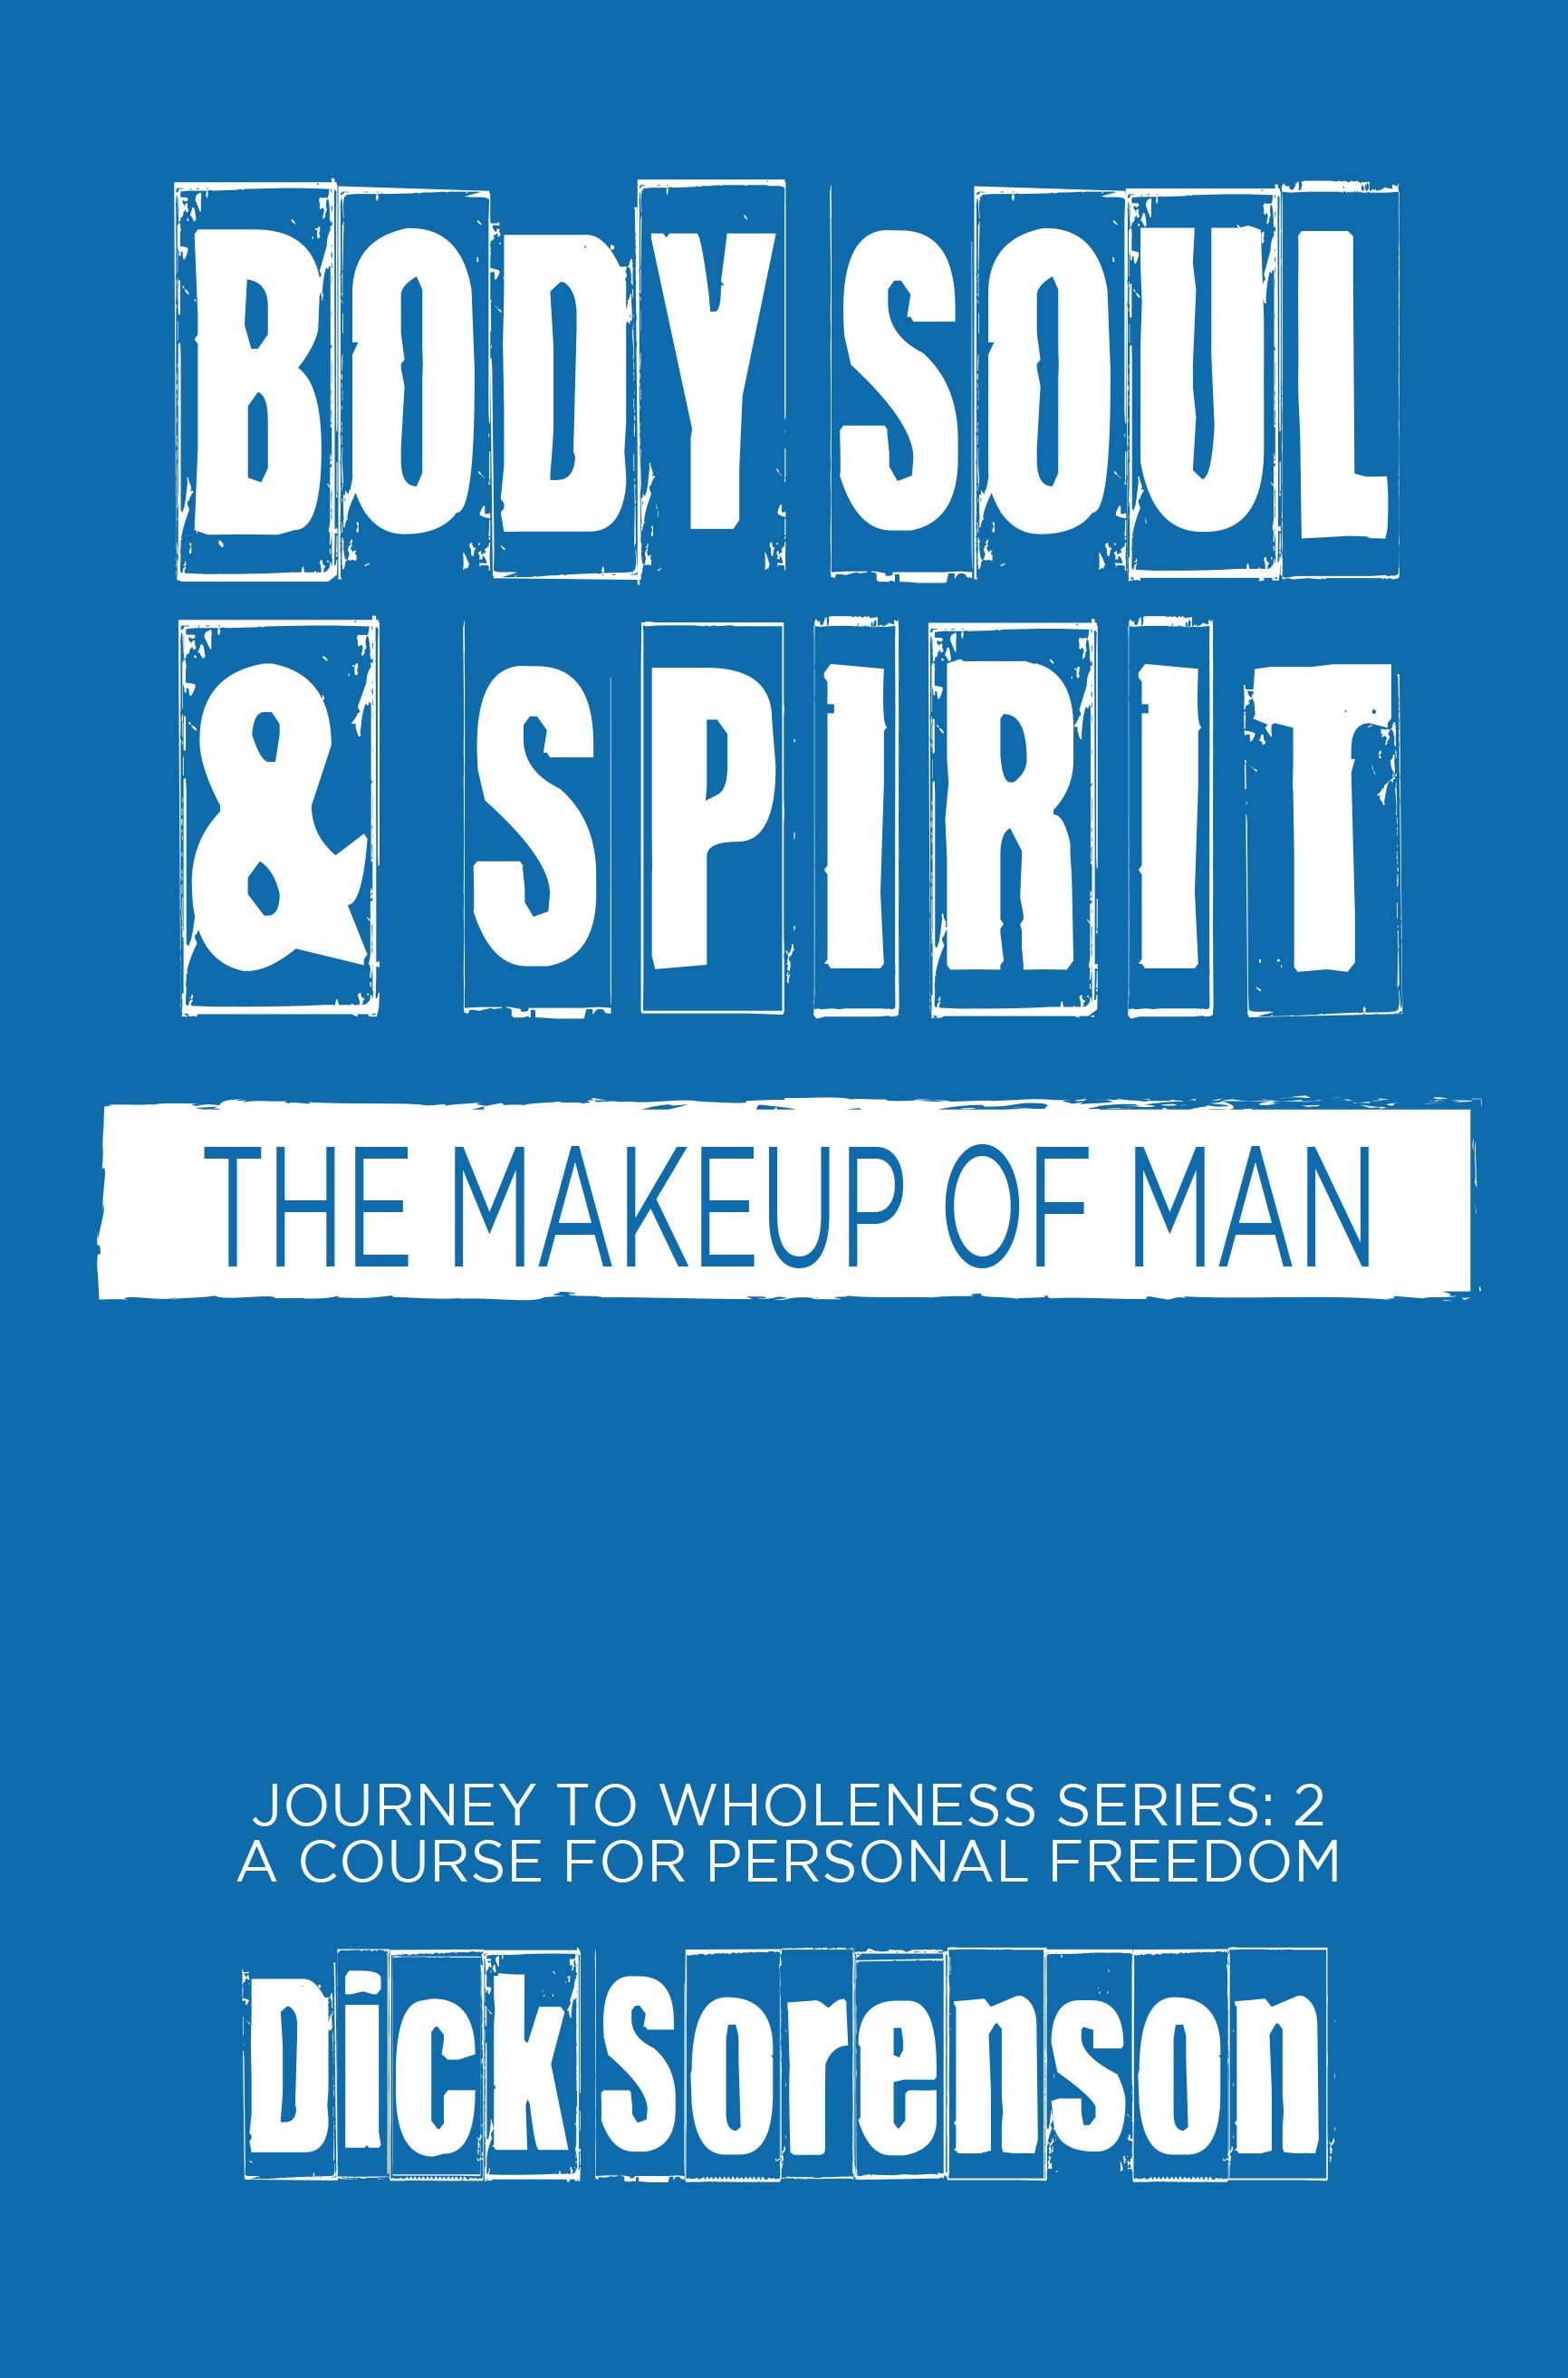 BODY SOUL SPIRIT (BLUE 4) 5.5x8.5_BW_100 03-02-22.jpg